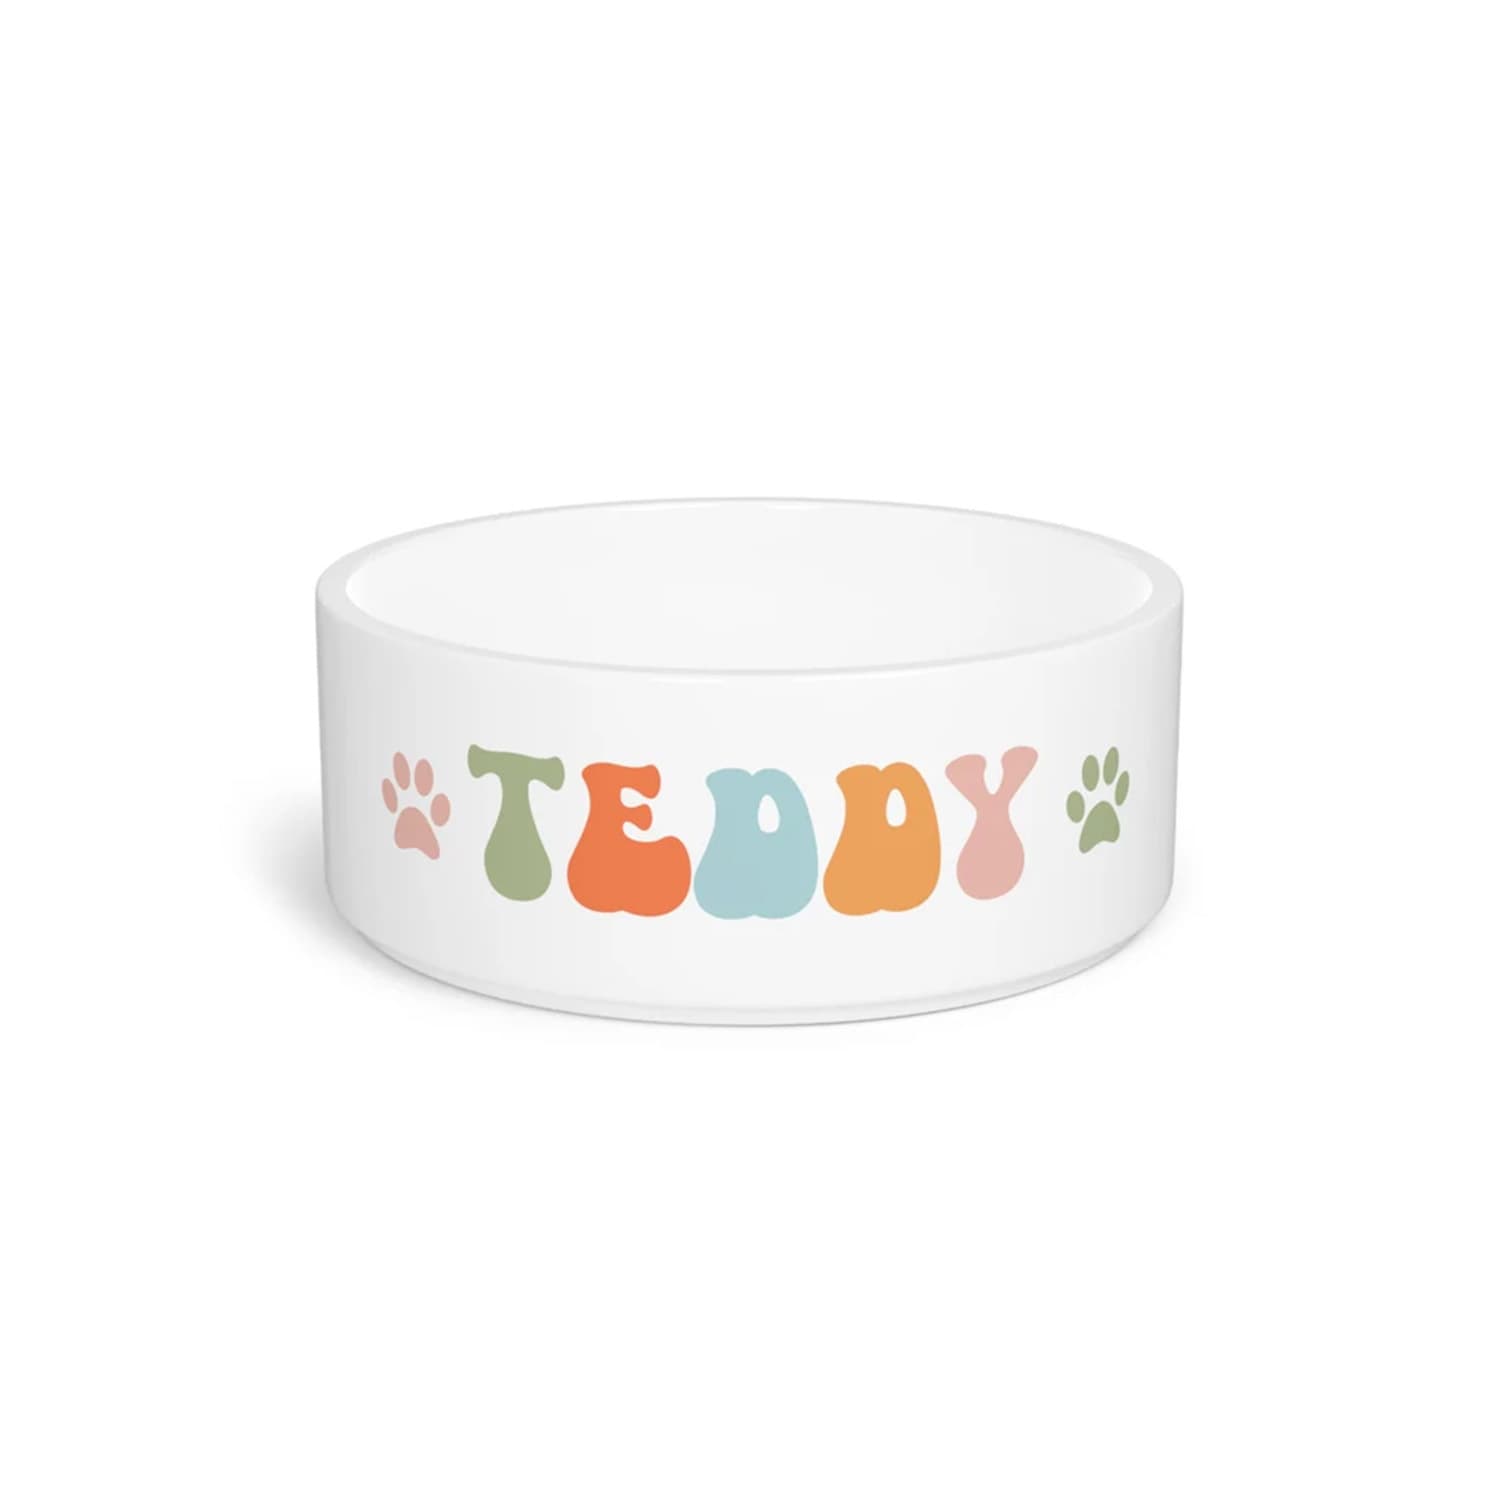 Dog Bowl Stand Tall Raised Dog Feeder Elevated Dog Bowls Modern Dog Bowl  Set Pet Lover Gift Dog Adoption Gift Ceramic Dog Bowls 